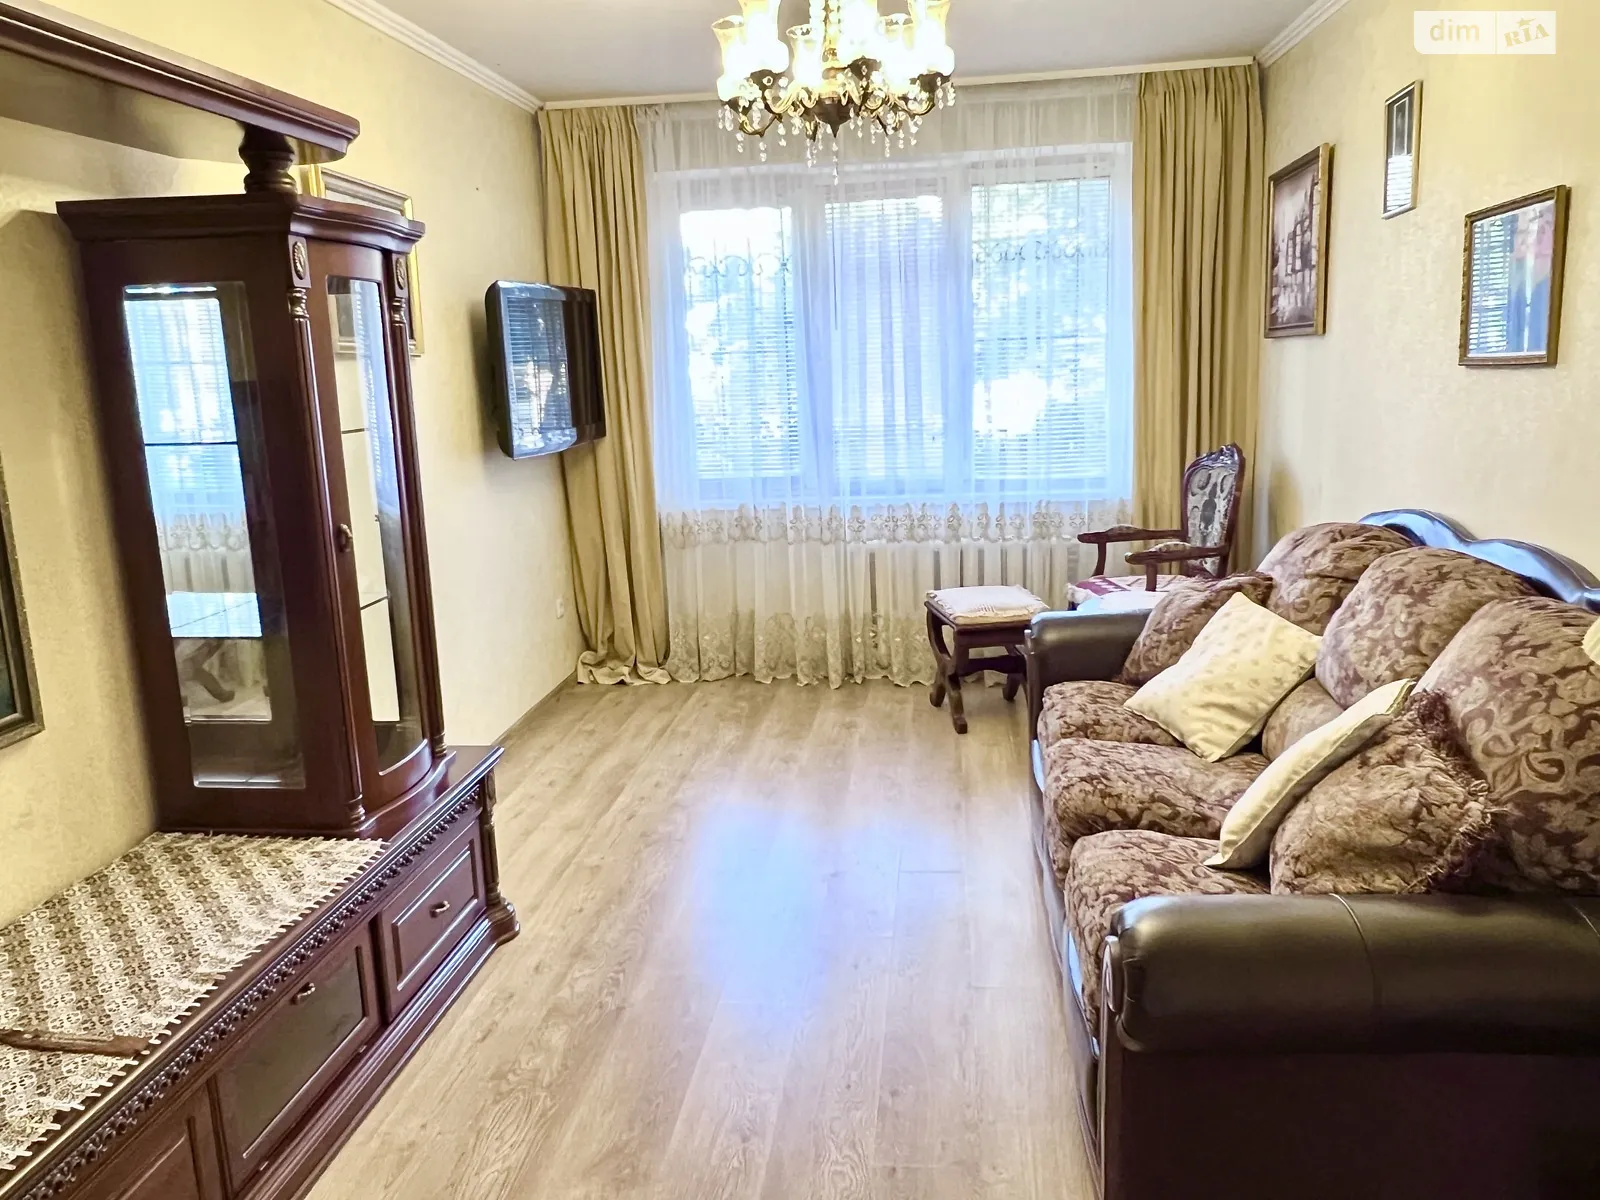 Продается комната 60.7 кв. м в Киеве, цена: 71000 $ - фото 1